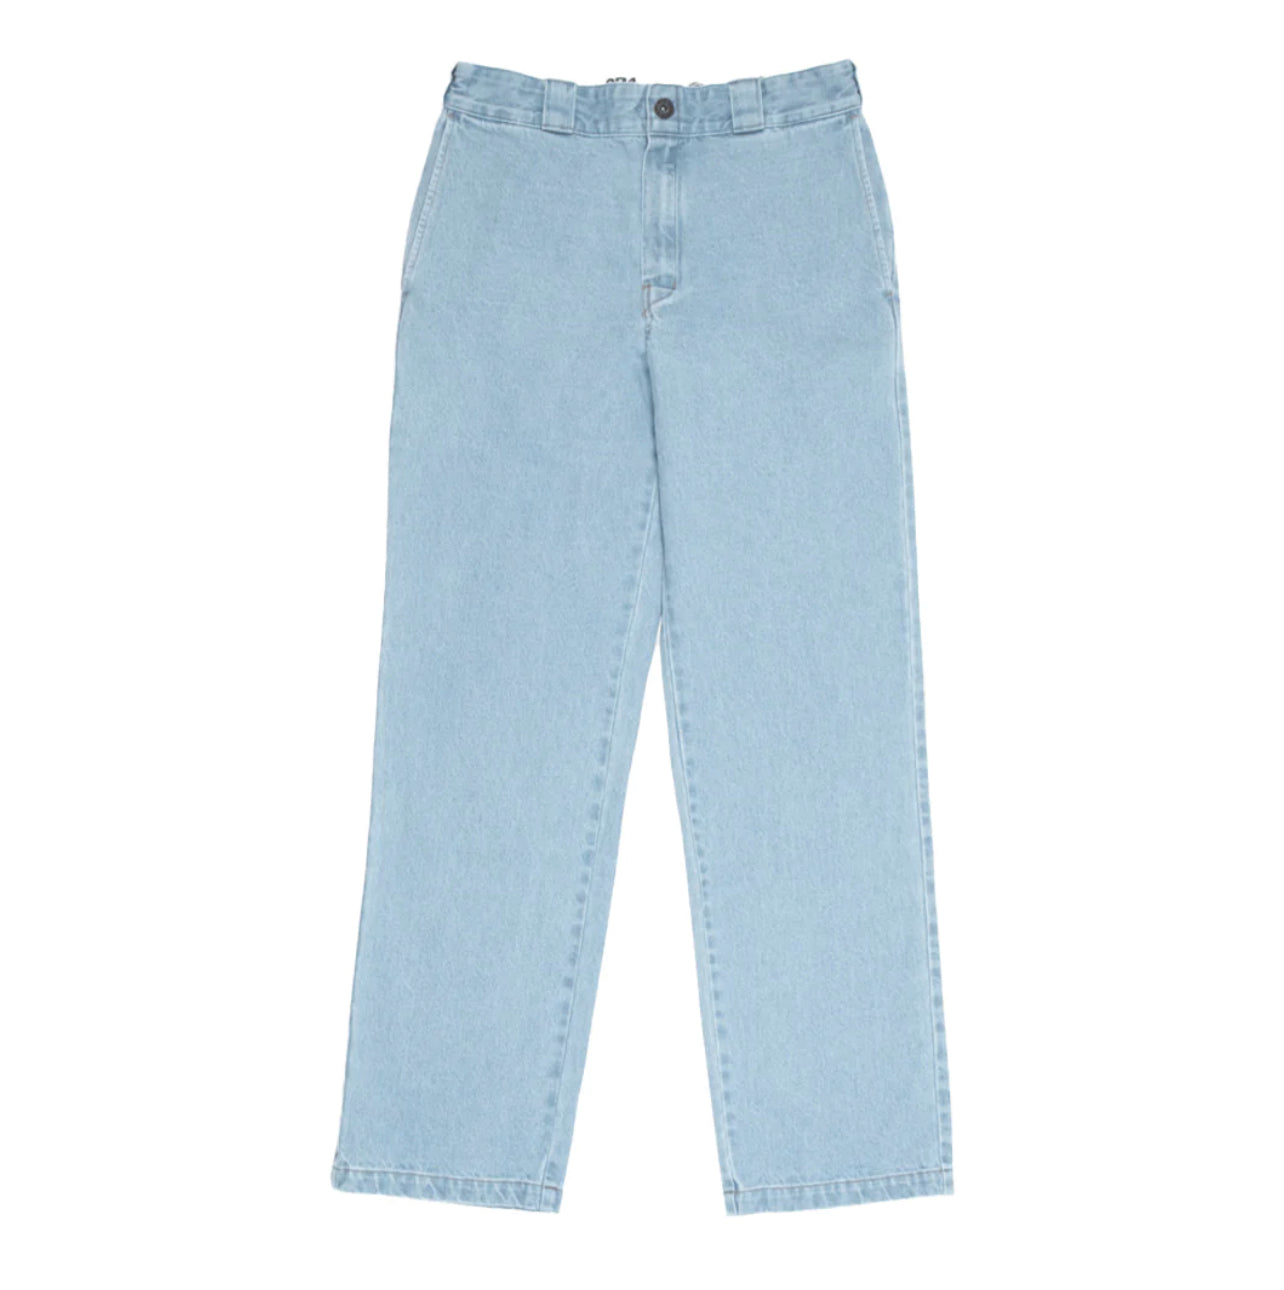 Dickies 874 original relaxed denim jeans - LIGHT INDIGO